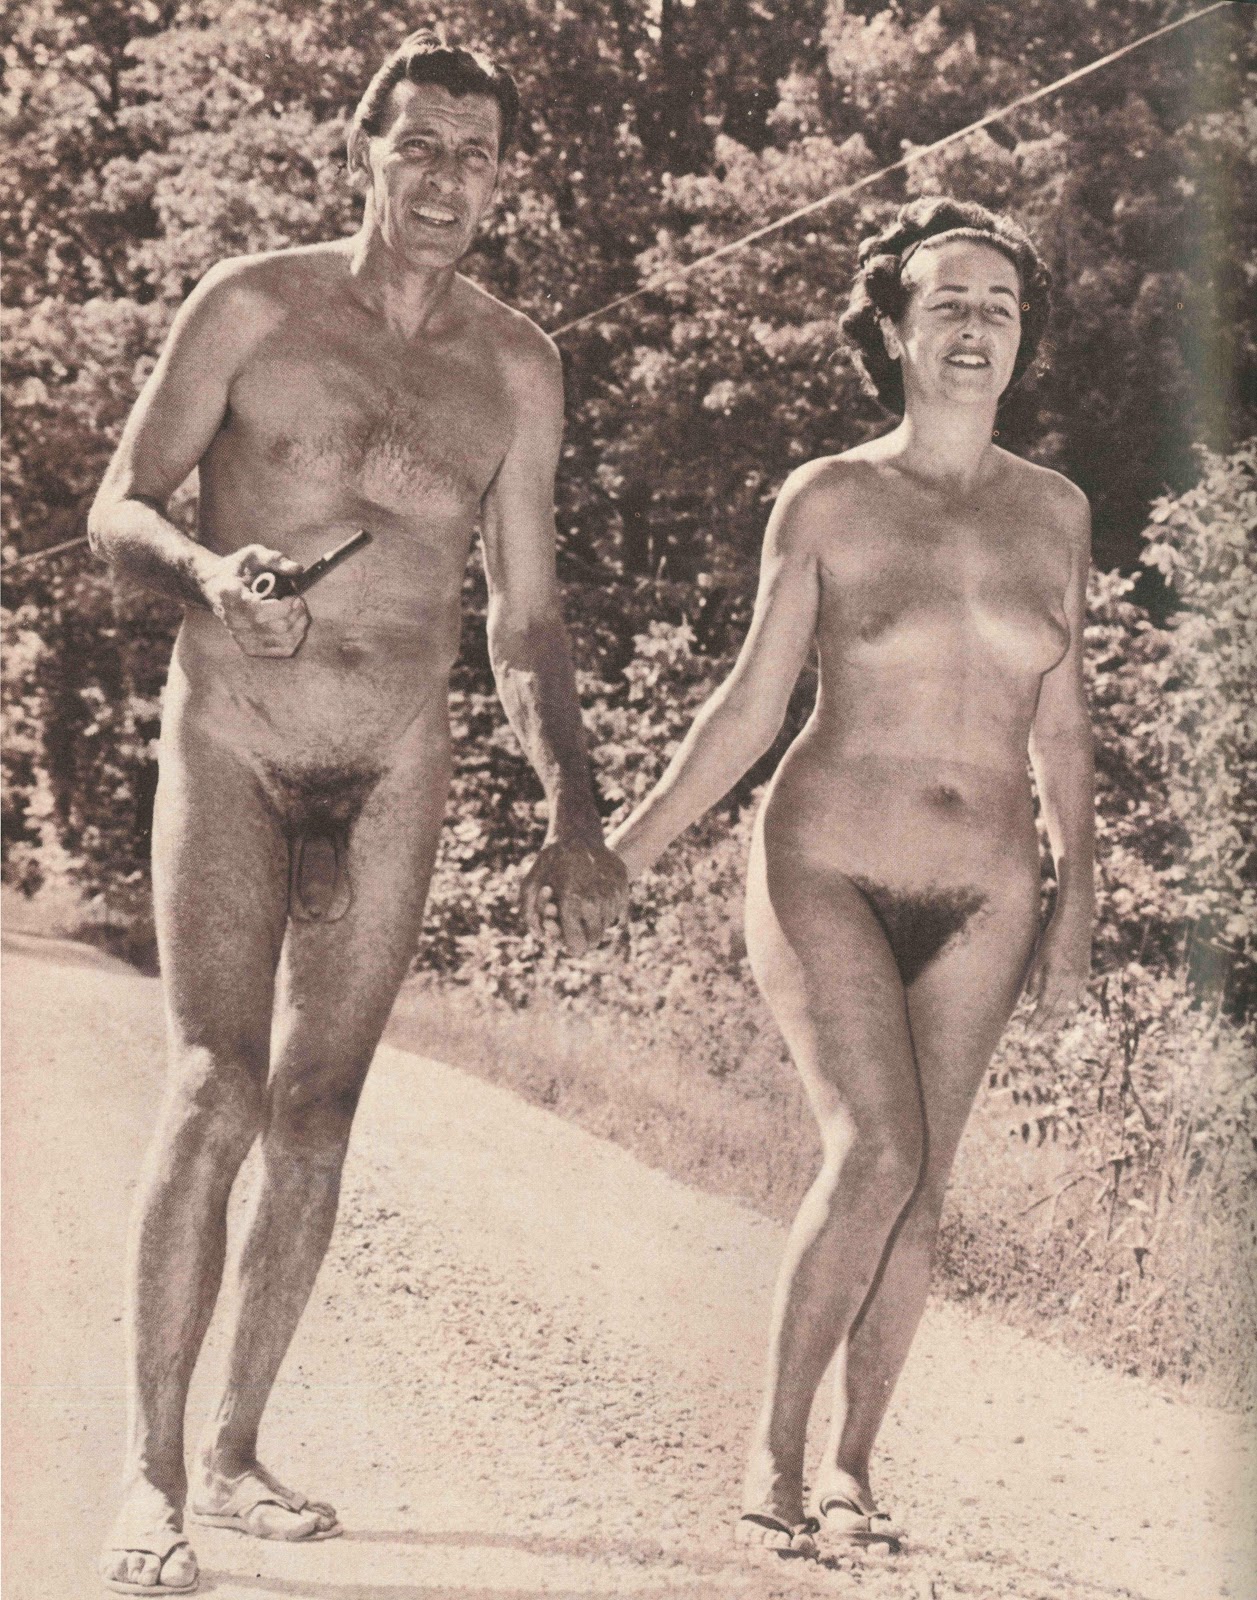 https://www.nudismlife.com/galleries/nudists_and_nude/nudists_couple/nudists_nude_naturists_couple_1957.jpg